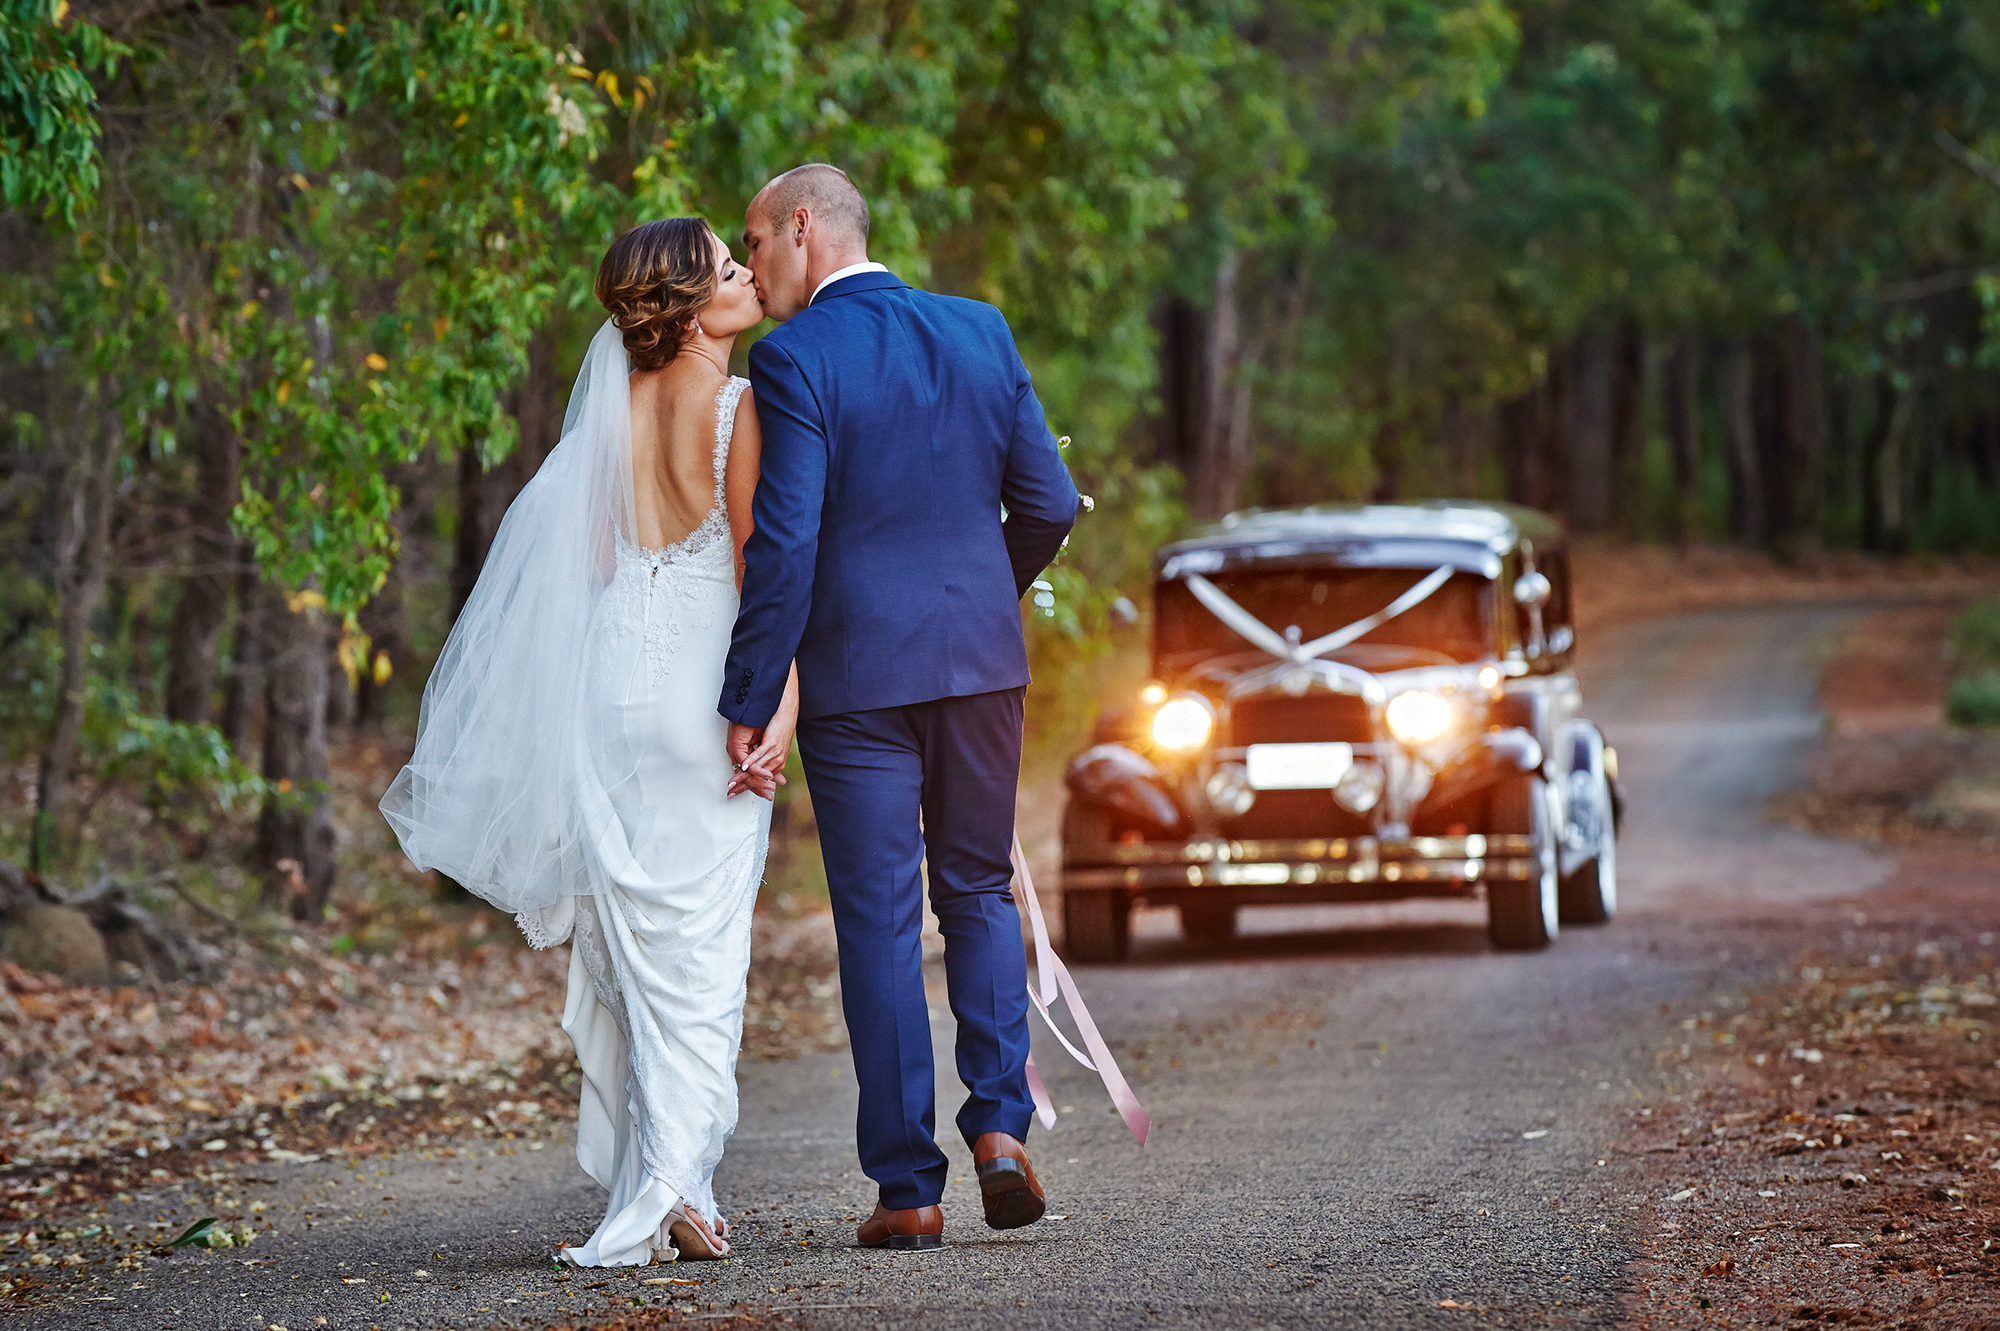 Adelaide_Ben_Rustic-Vineyard-Wedding_Peter-Edwards-Photography_027